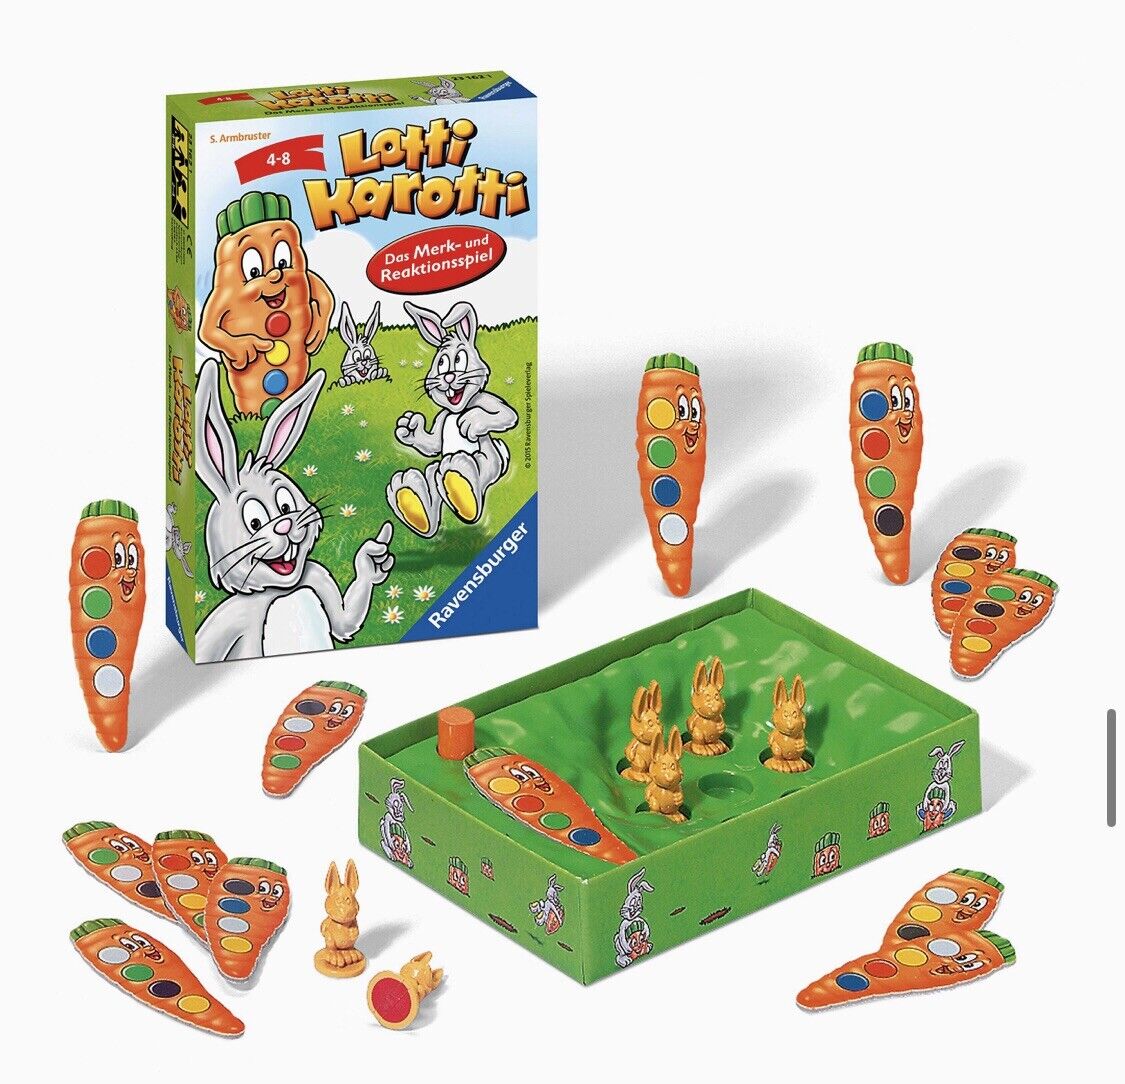 Rainbow Lotti Game 4-8 – Years Karotti Rabbit G&S Children\'s Store Fun German Ravensburger